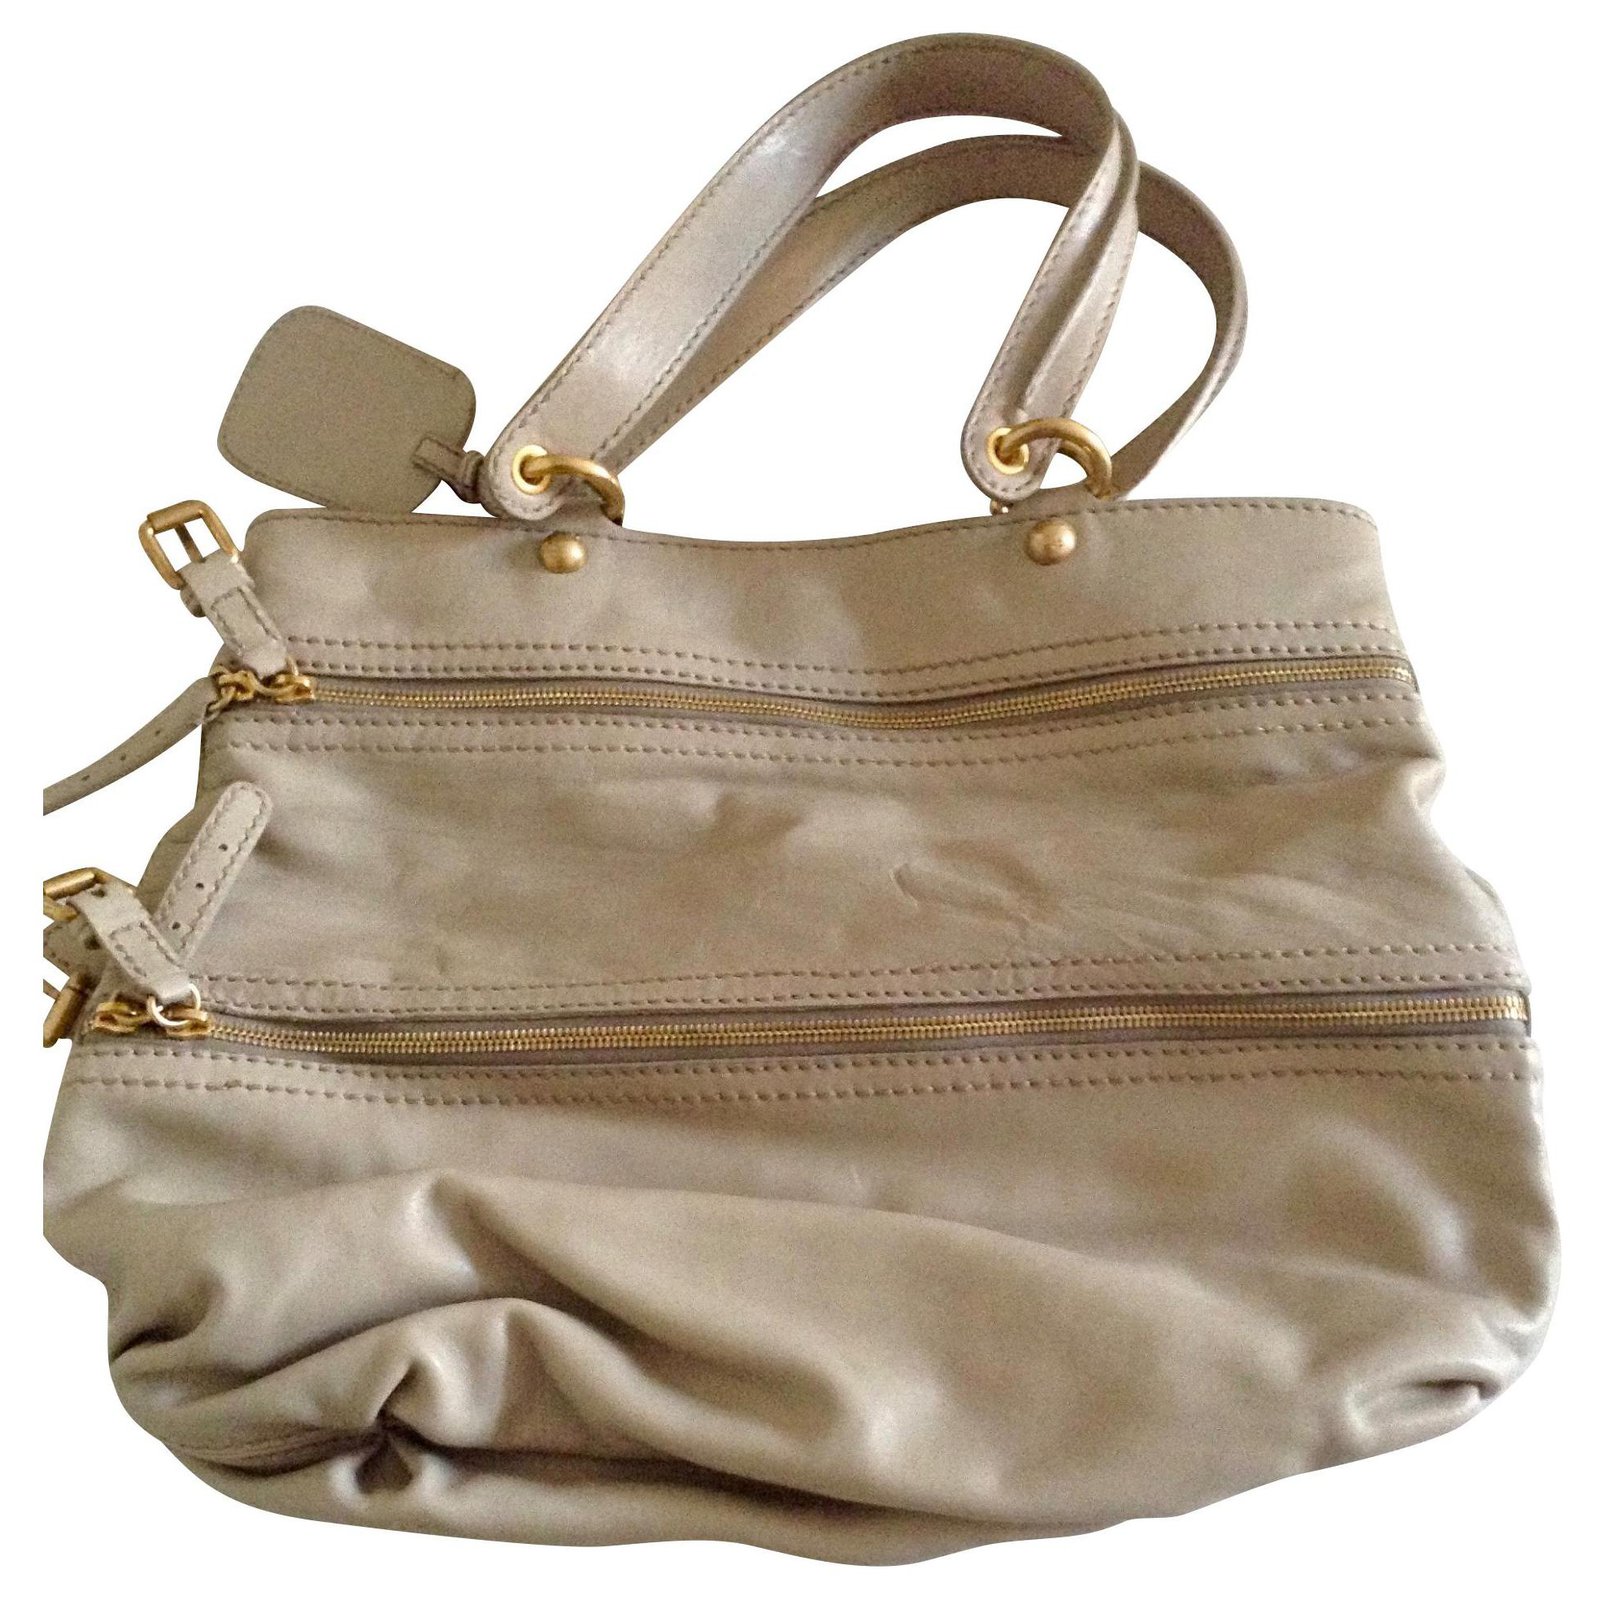 used dolce and gabbana handbags